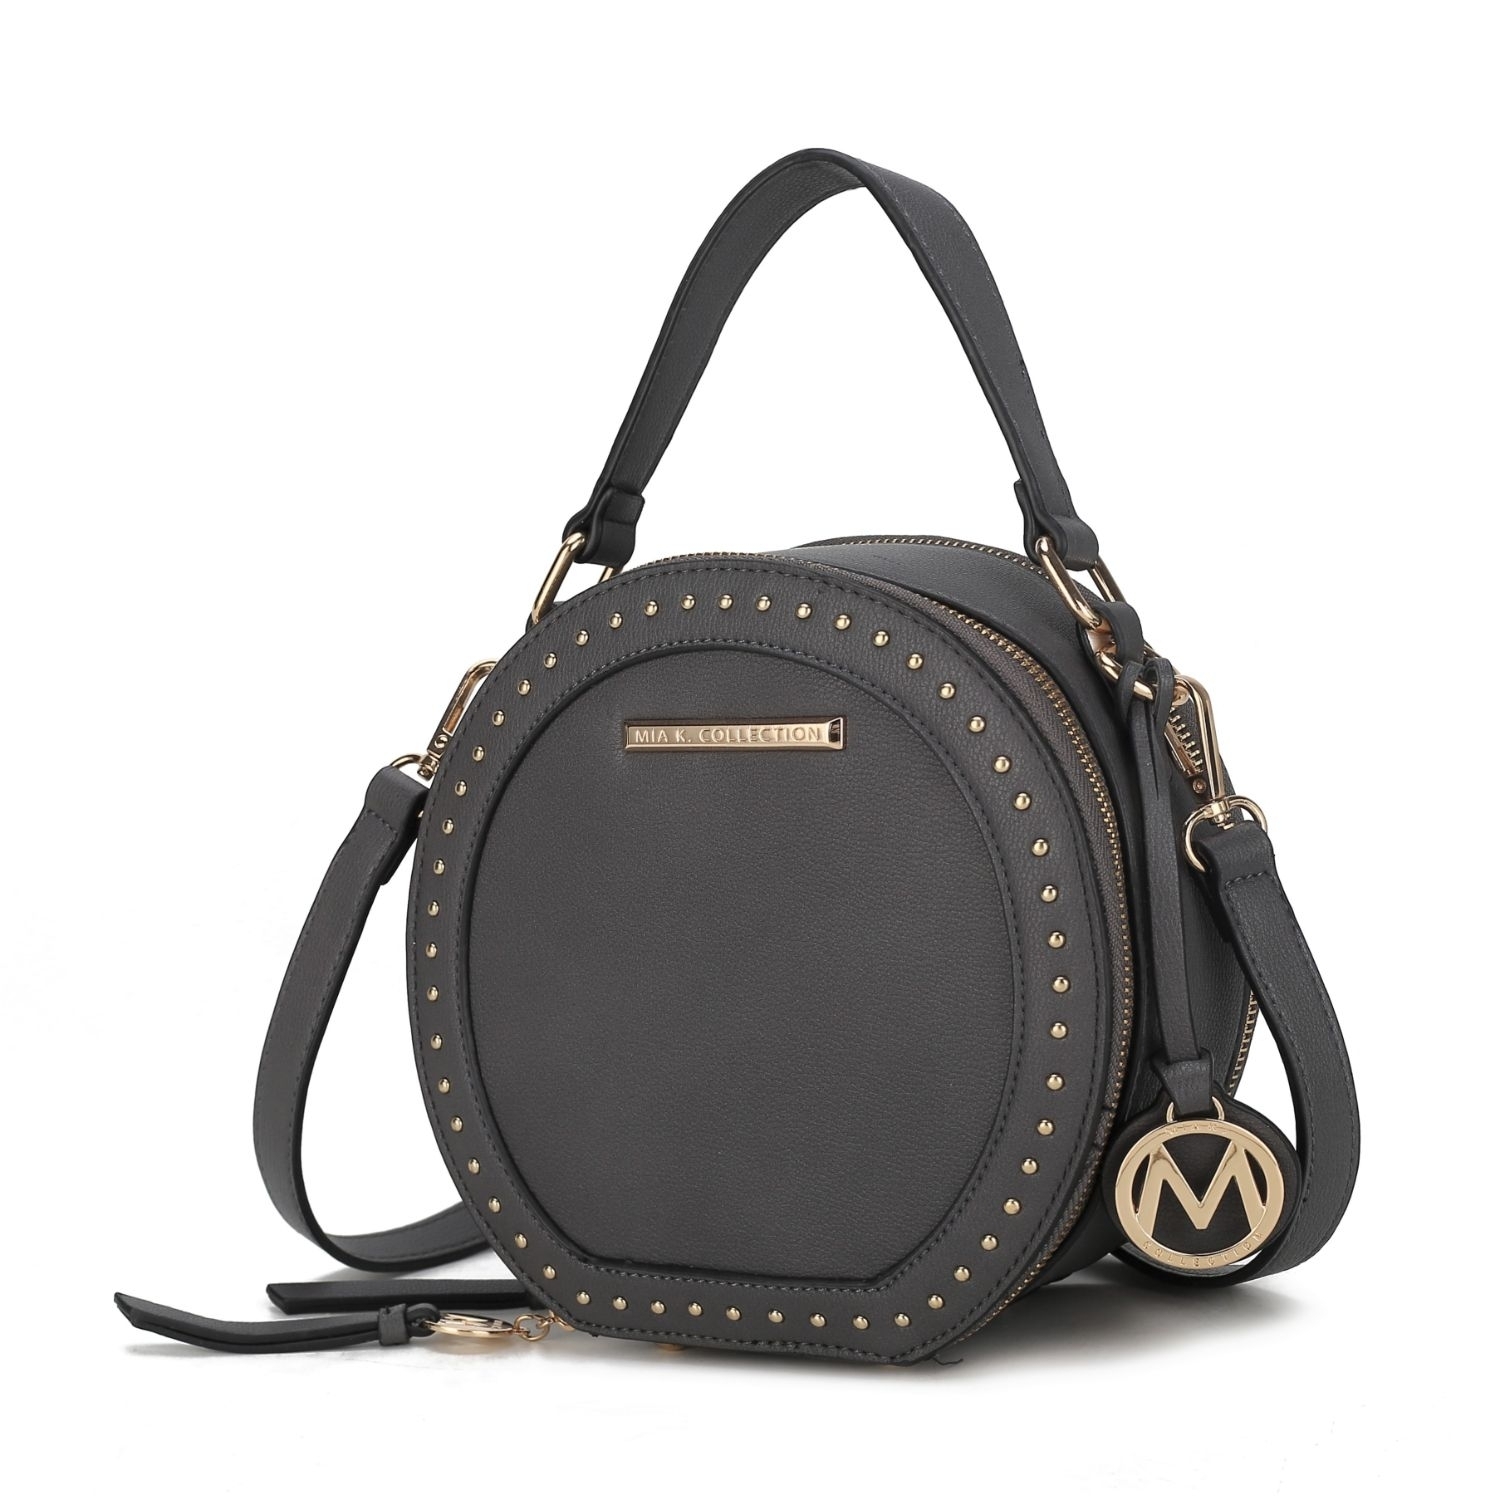 MKF Collection Lydie Crossbody Handbag By Mia K - Charcoal